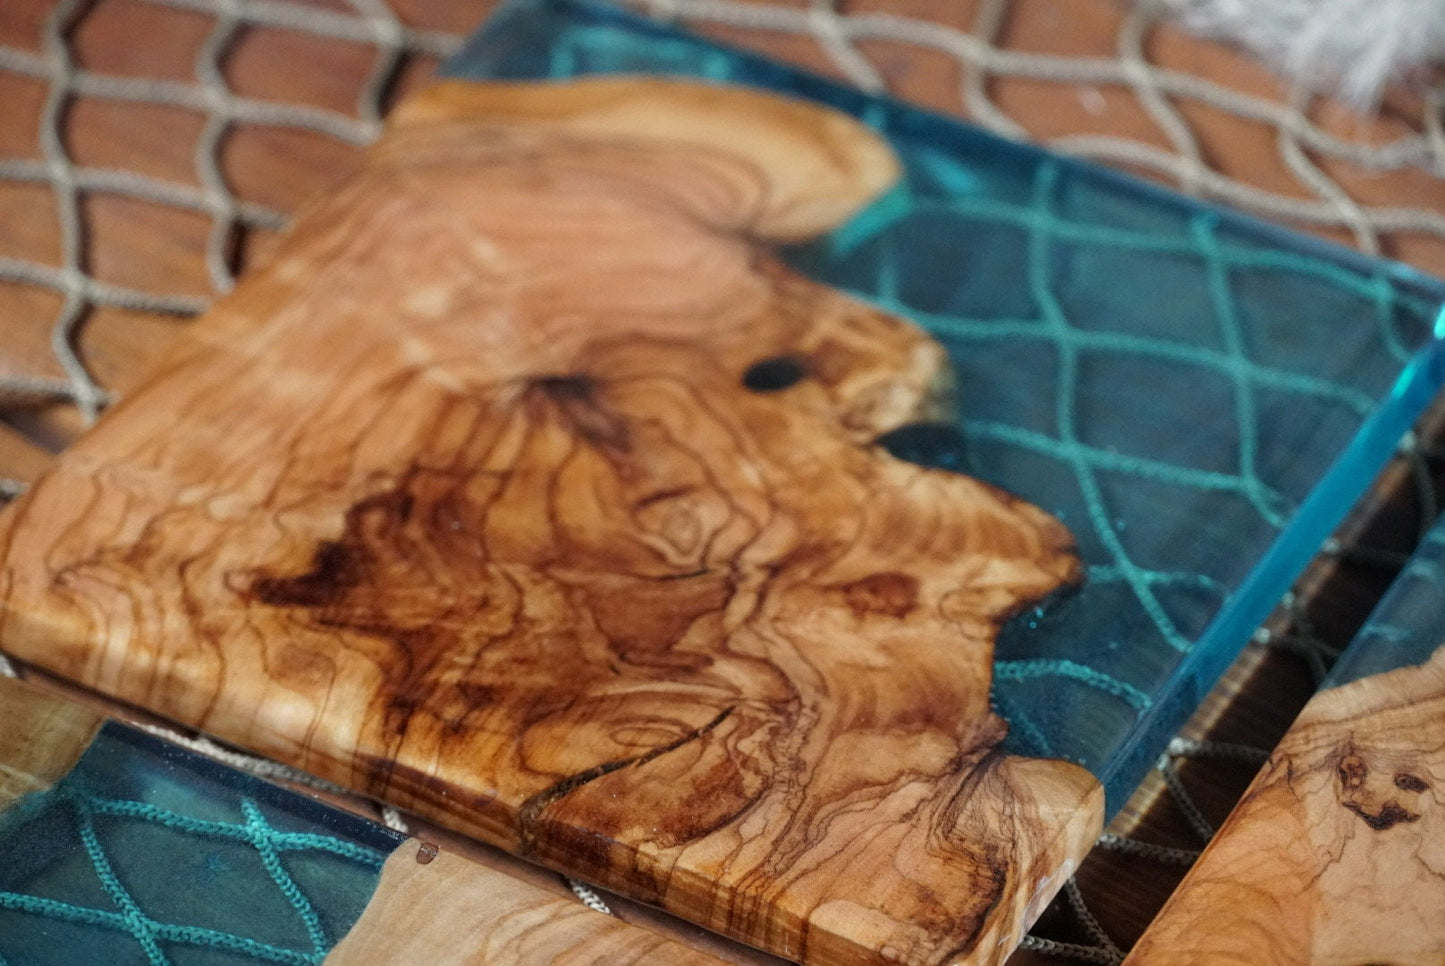 Aqua Blue/Green Resin and Olive Wood Coasters